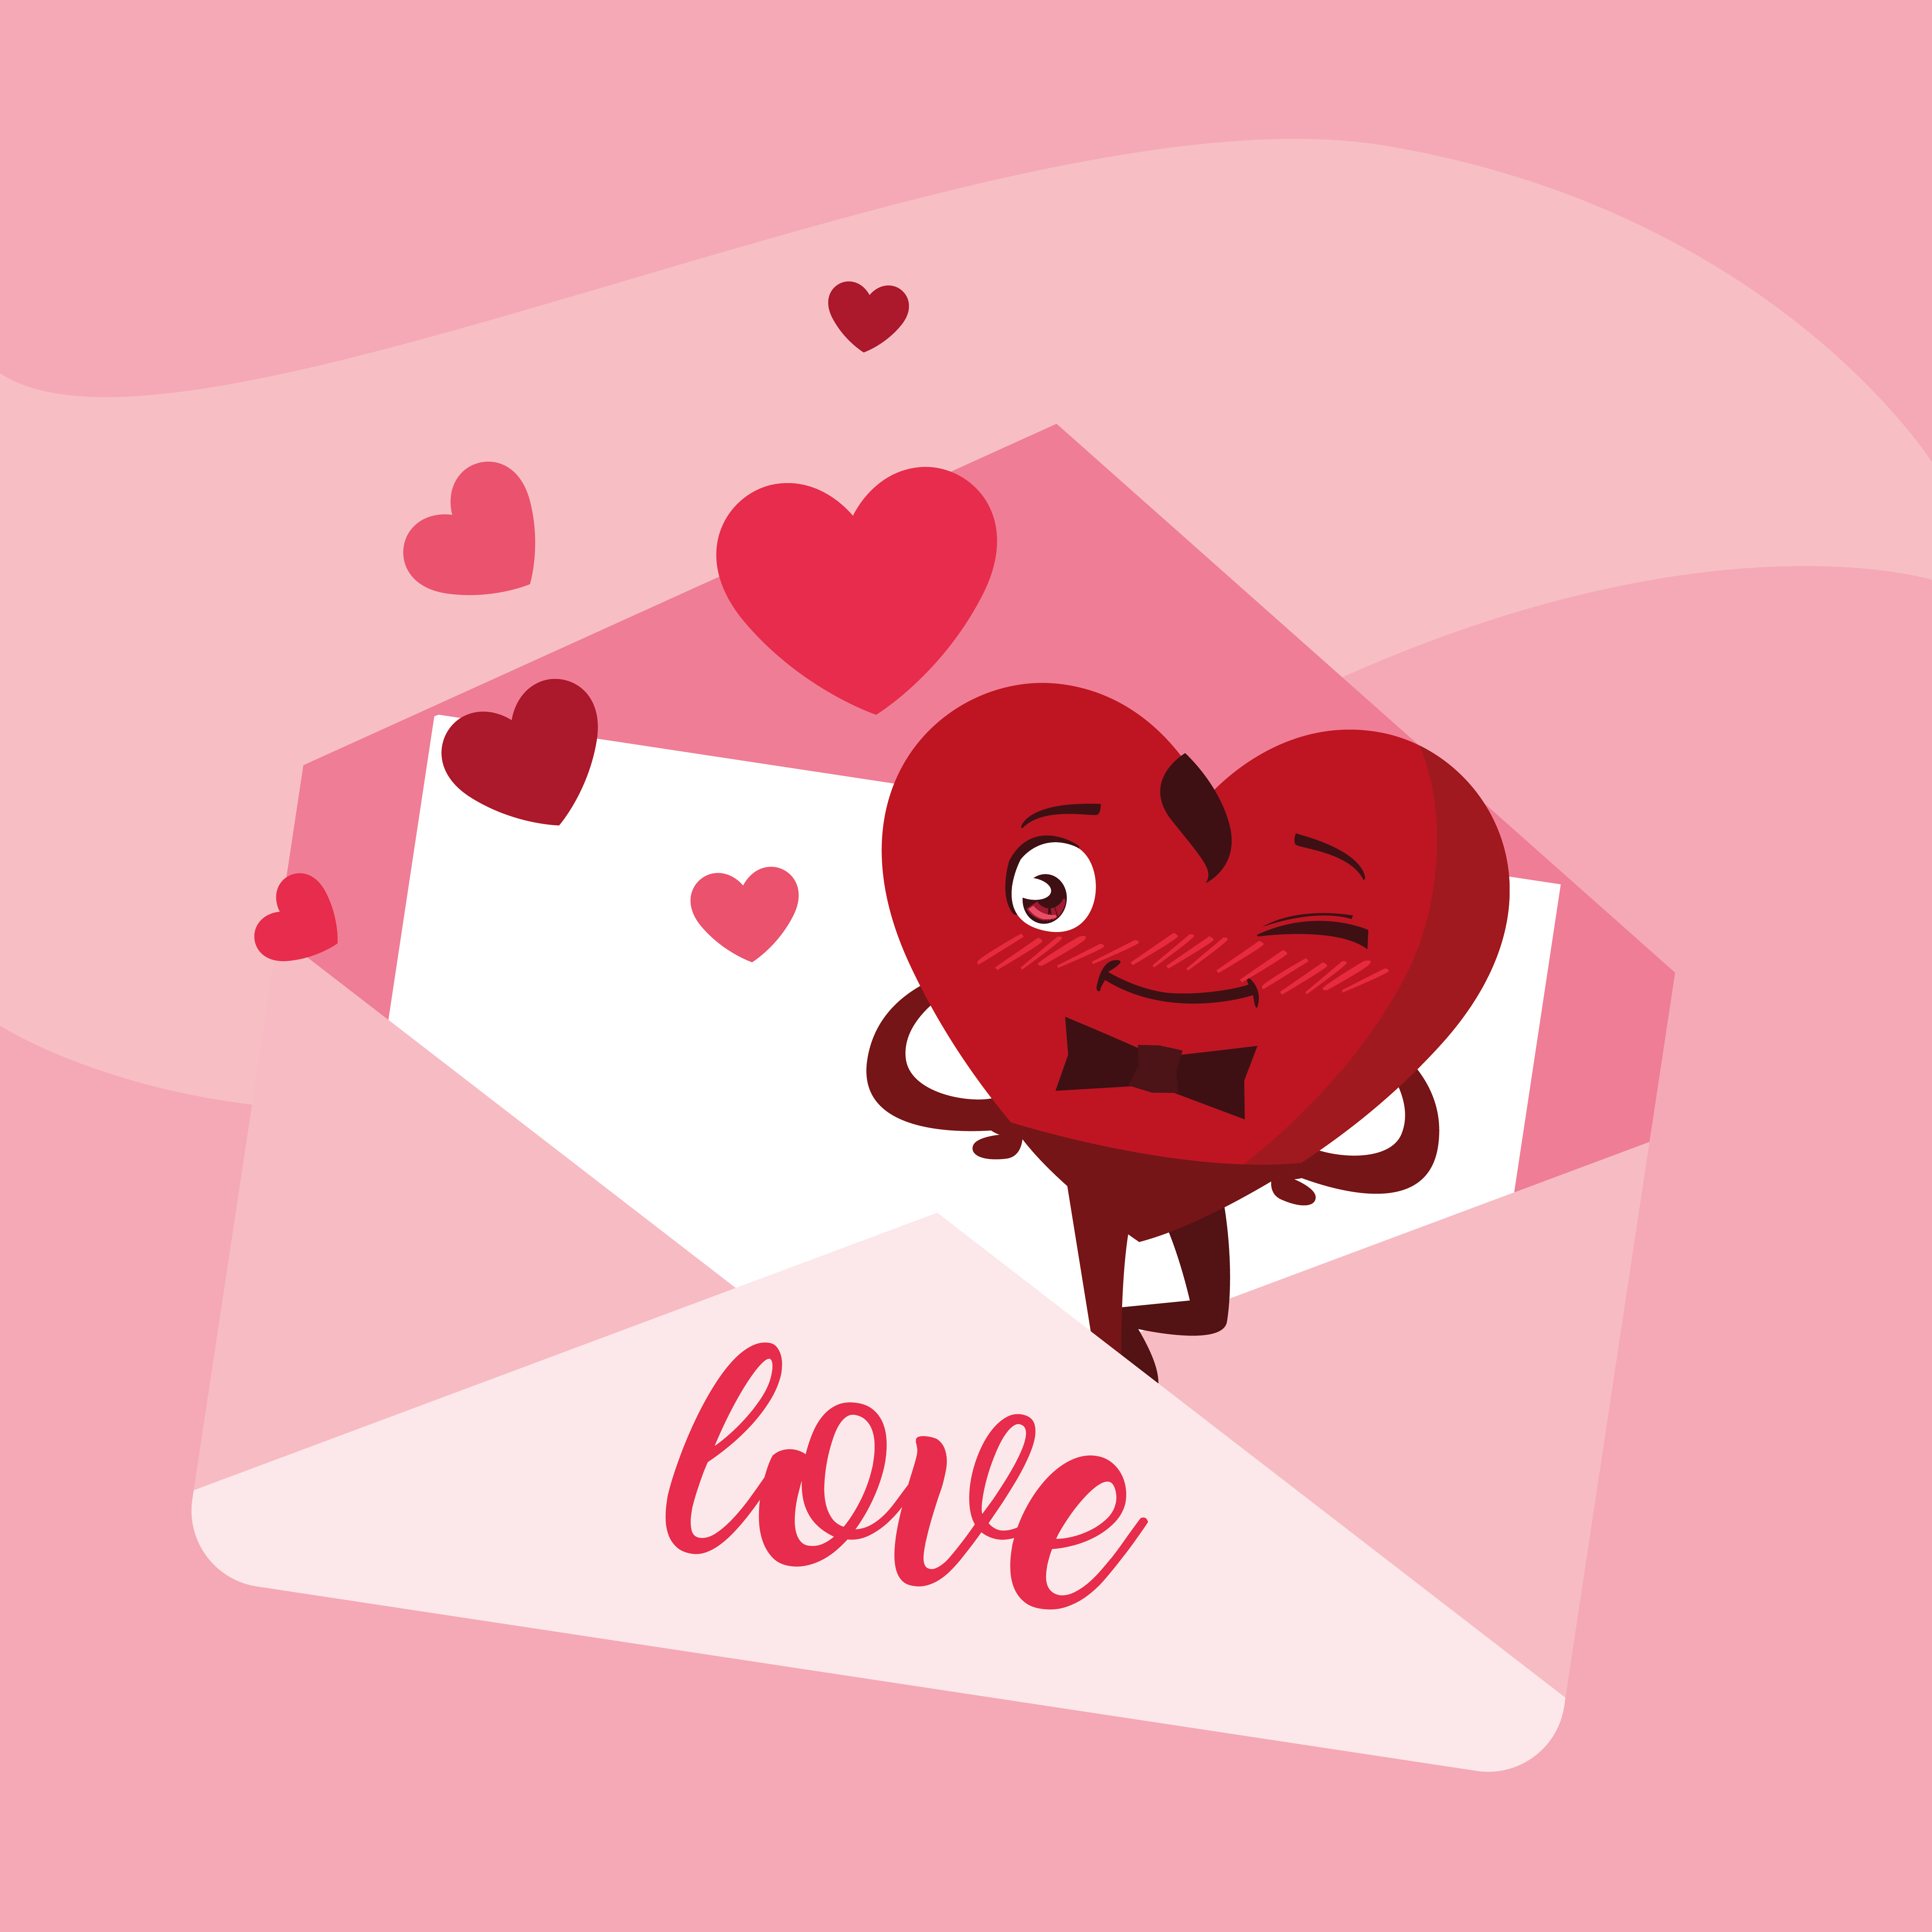 Download Love Note in Envelope - Download Free Vectors, Clipart ...